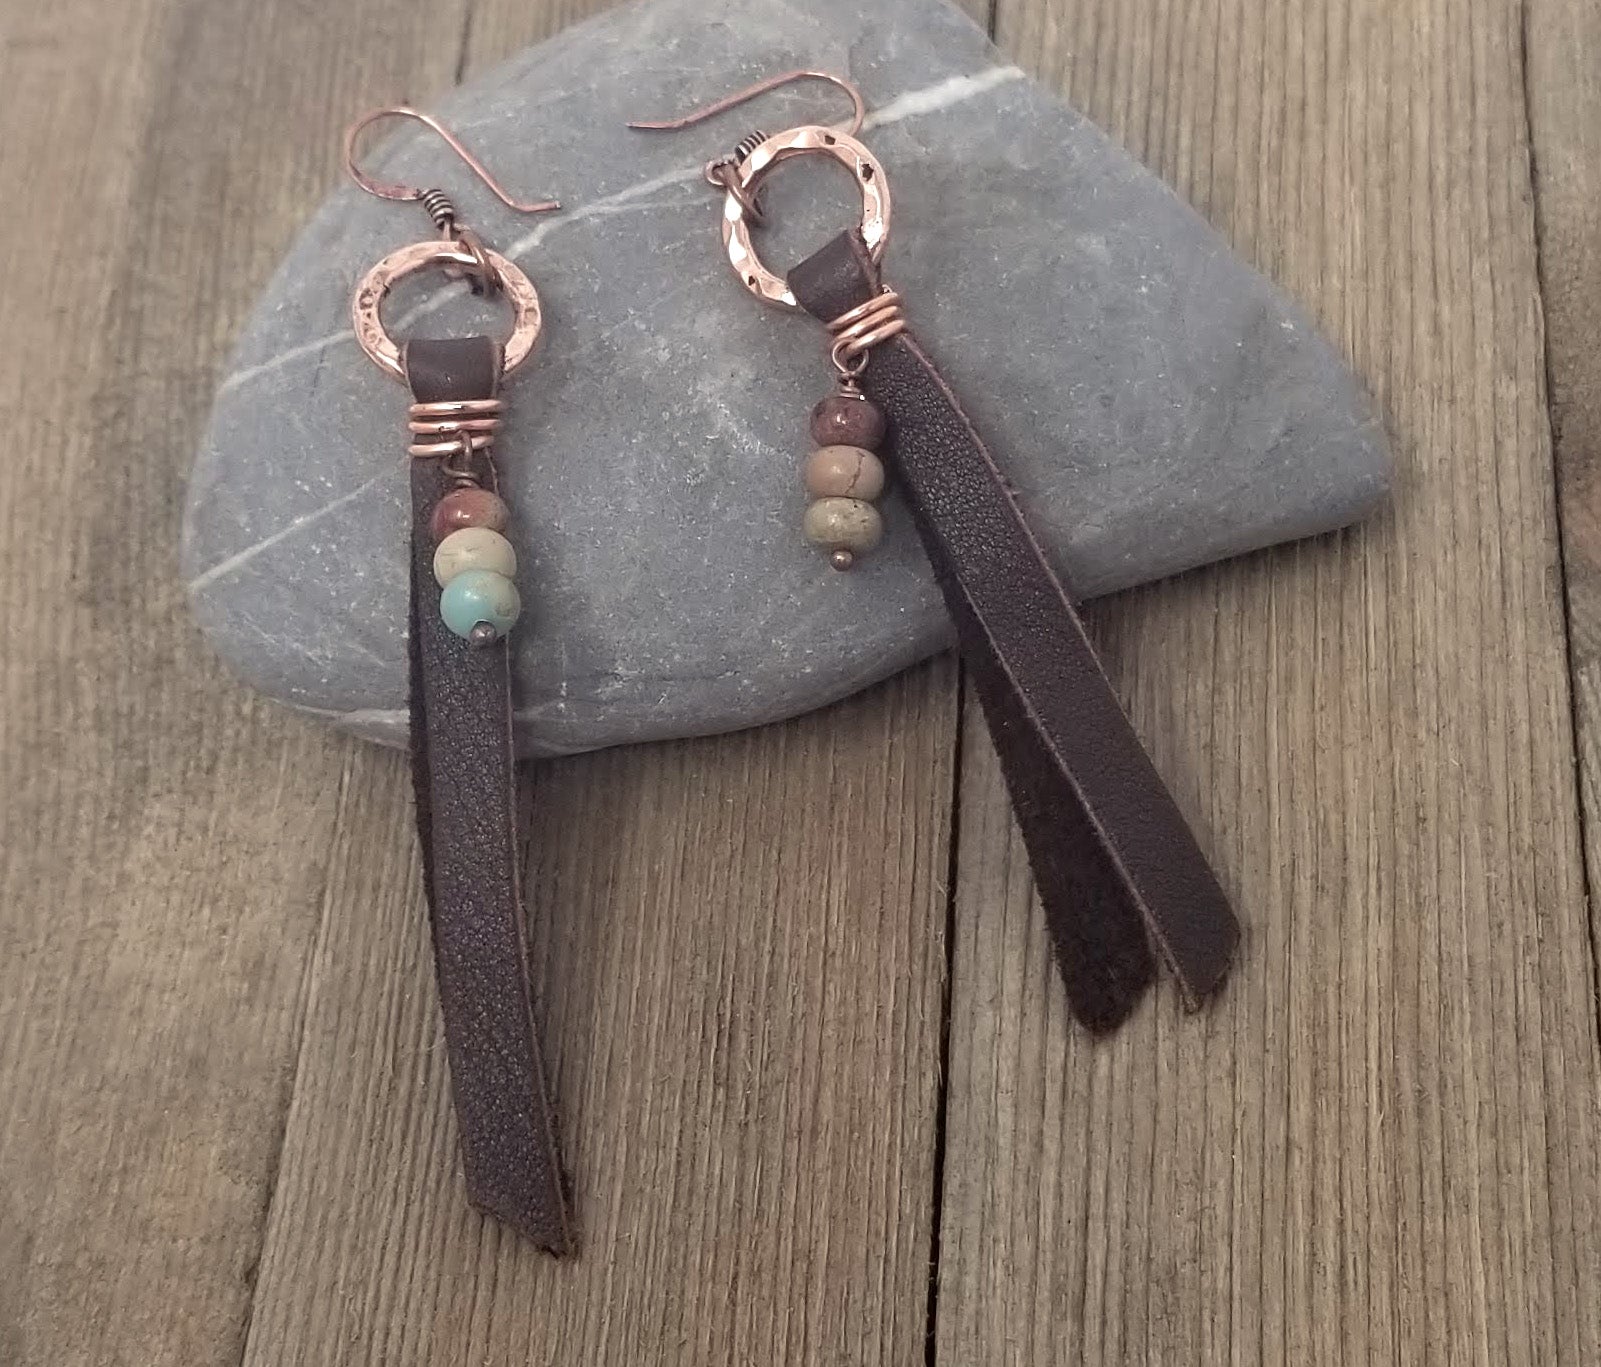 Copper hoop earrings with leather tassel and Aqua Terra Jasper bead cluster